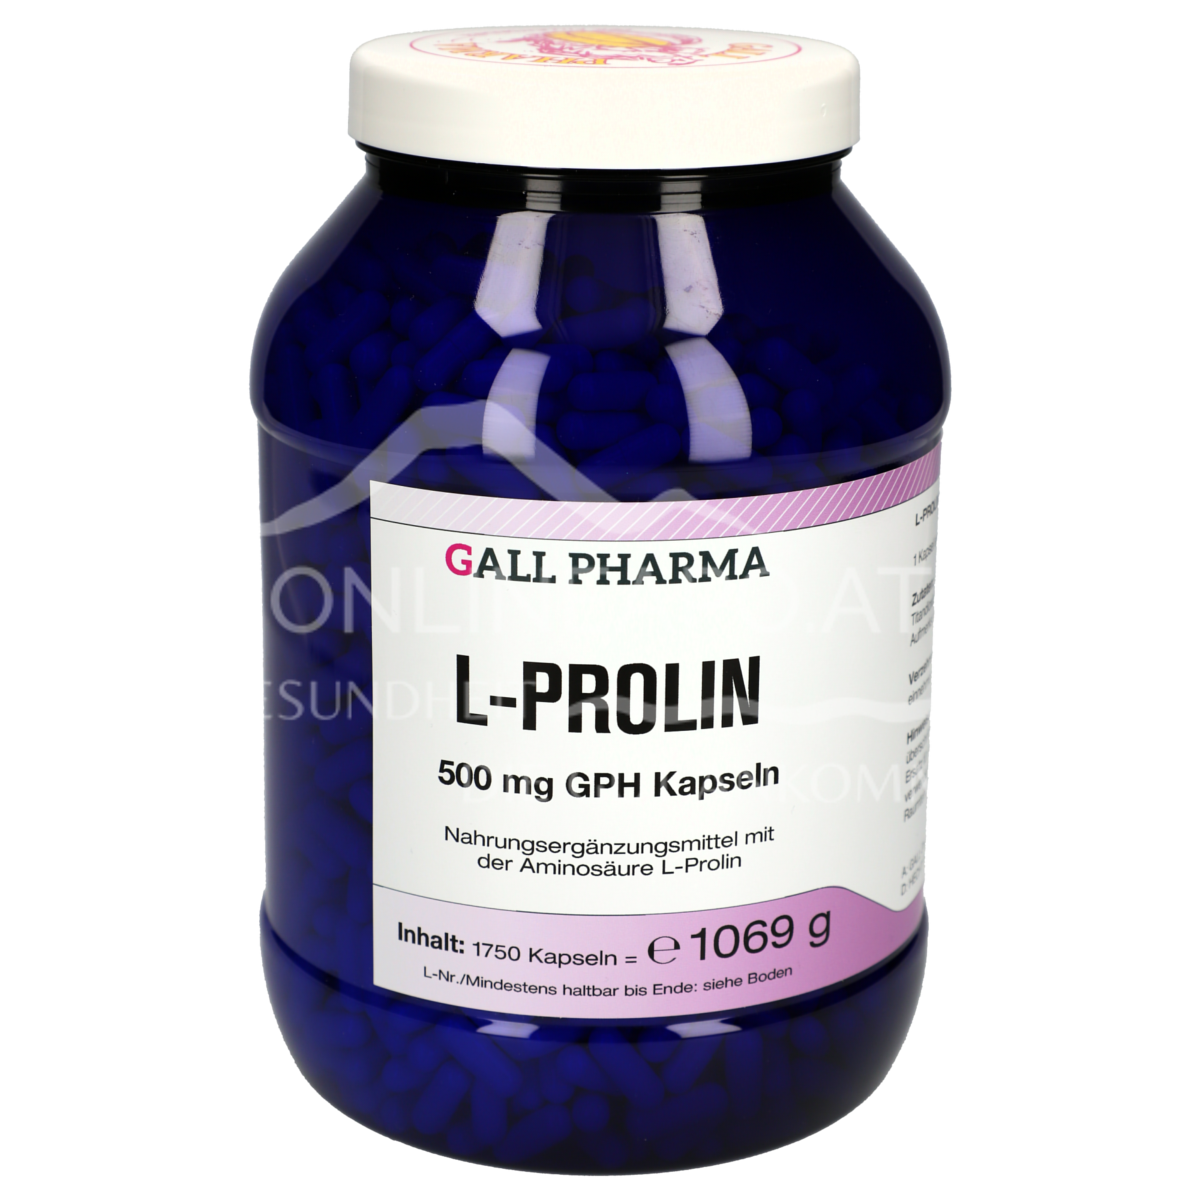 Gall Pharma L-Prolin 500 mg Kapseln